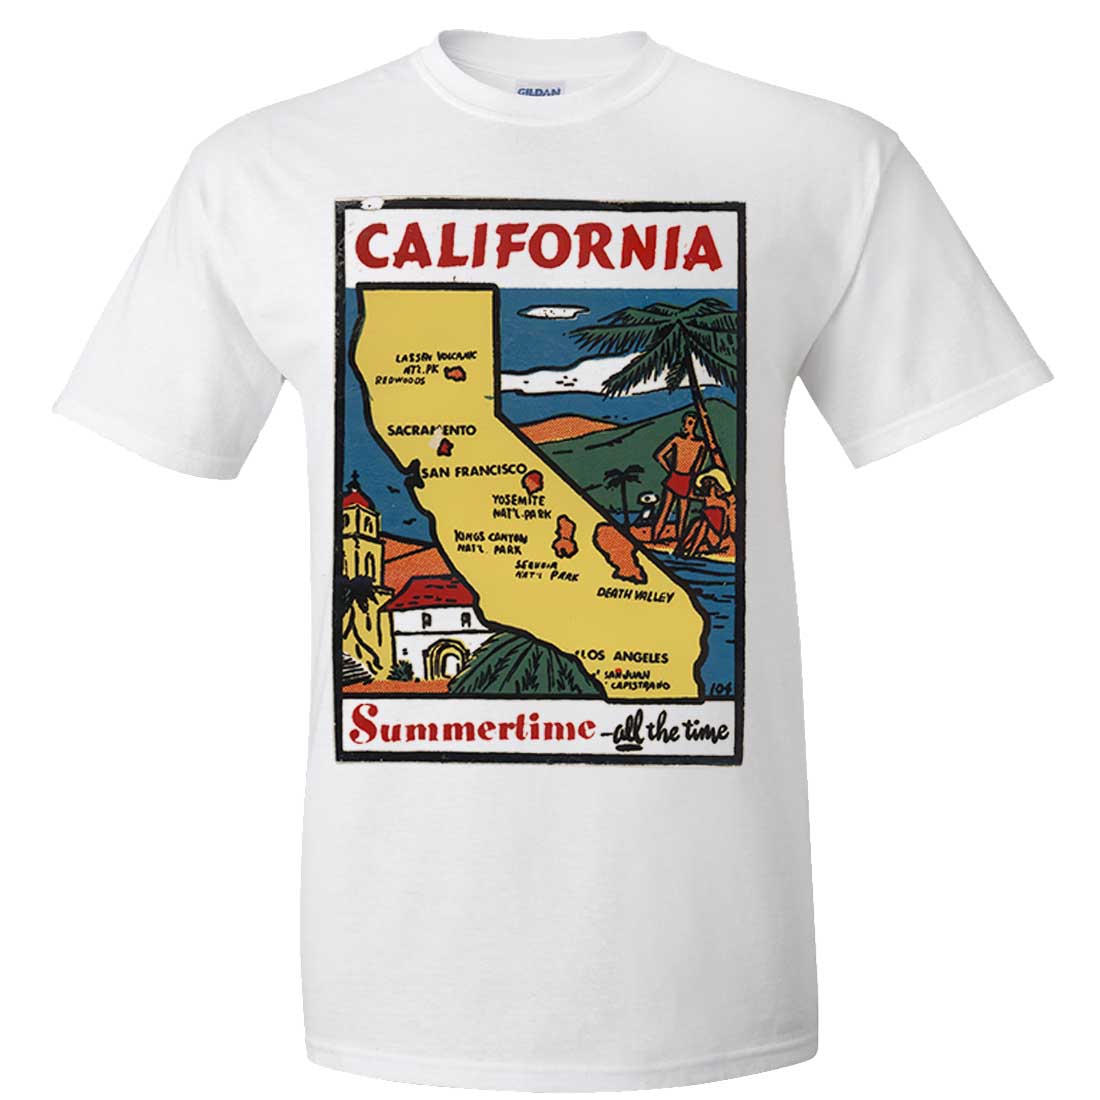 California Golden State 1850 Asst Colors T-shirt/tee - California Republic  Clothes